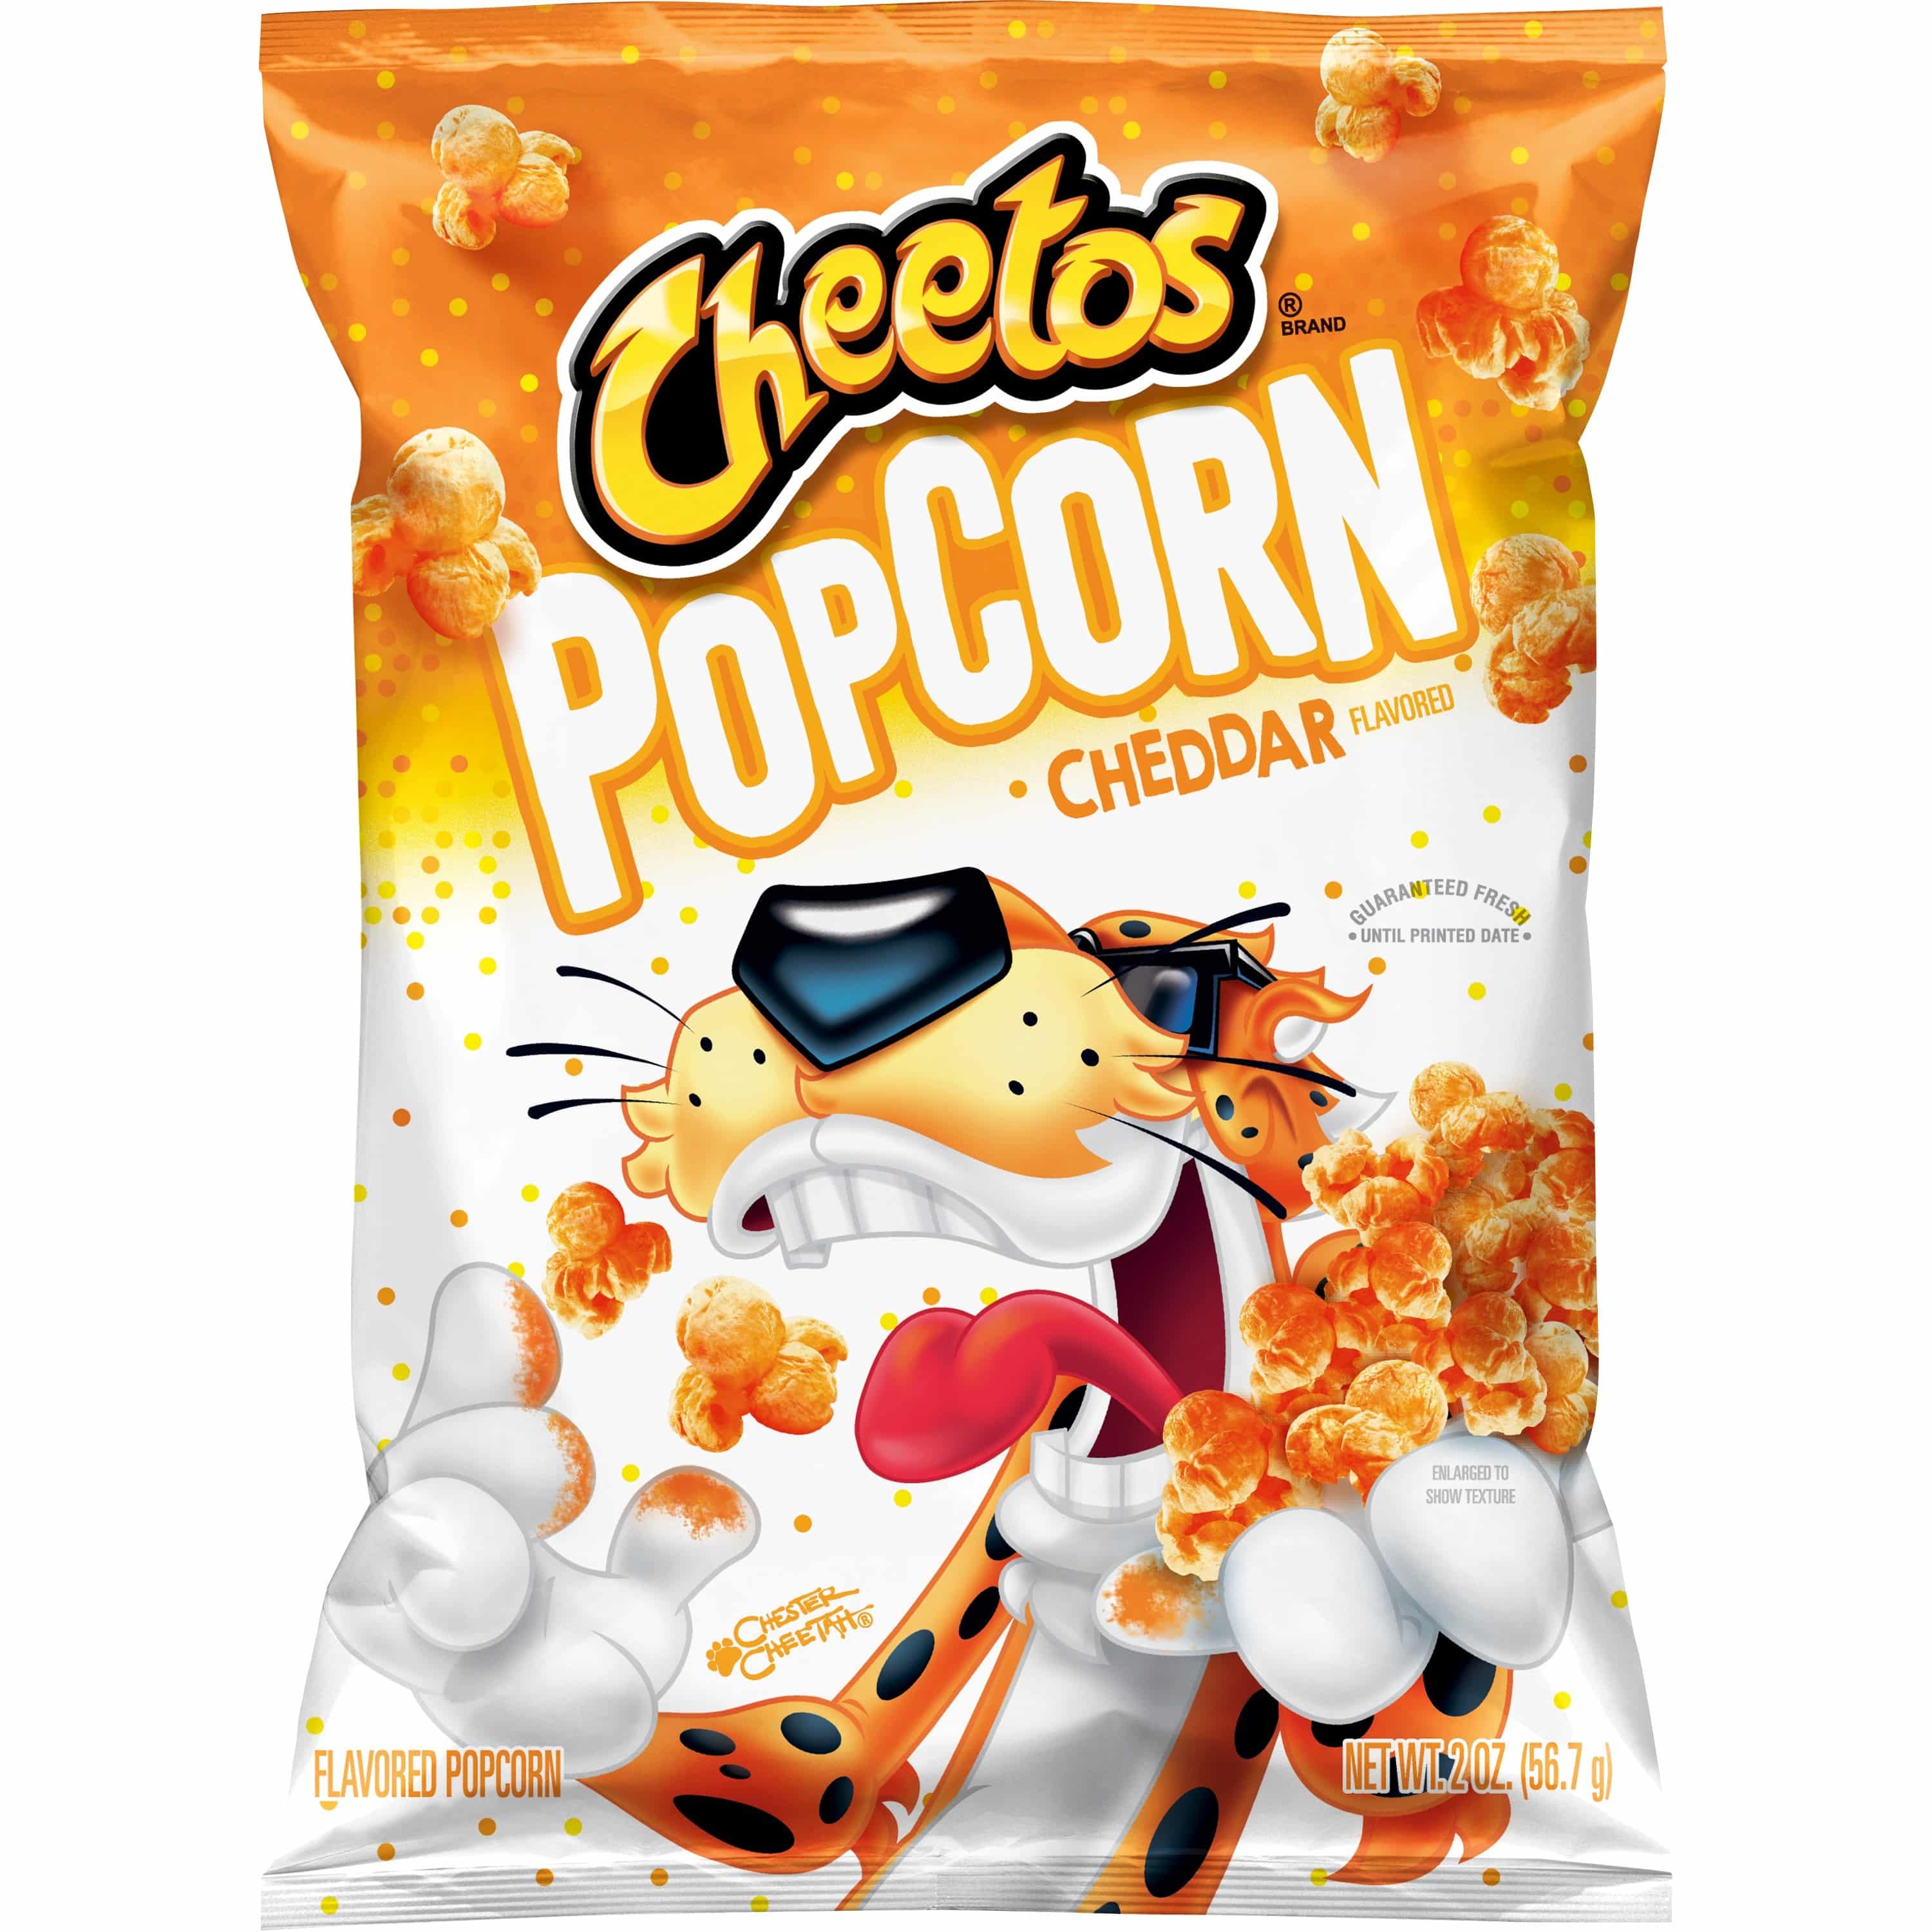 https://www.vendingconnection.com/wp-content/uploads/2020/02/cheetos-popcorn-bag.jpeg